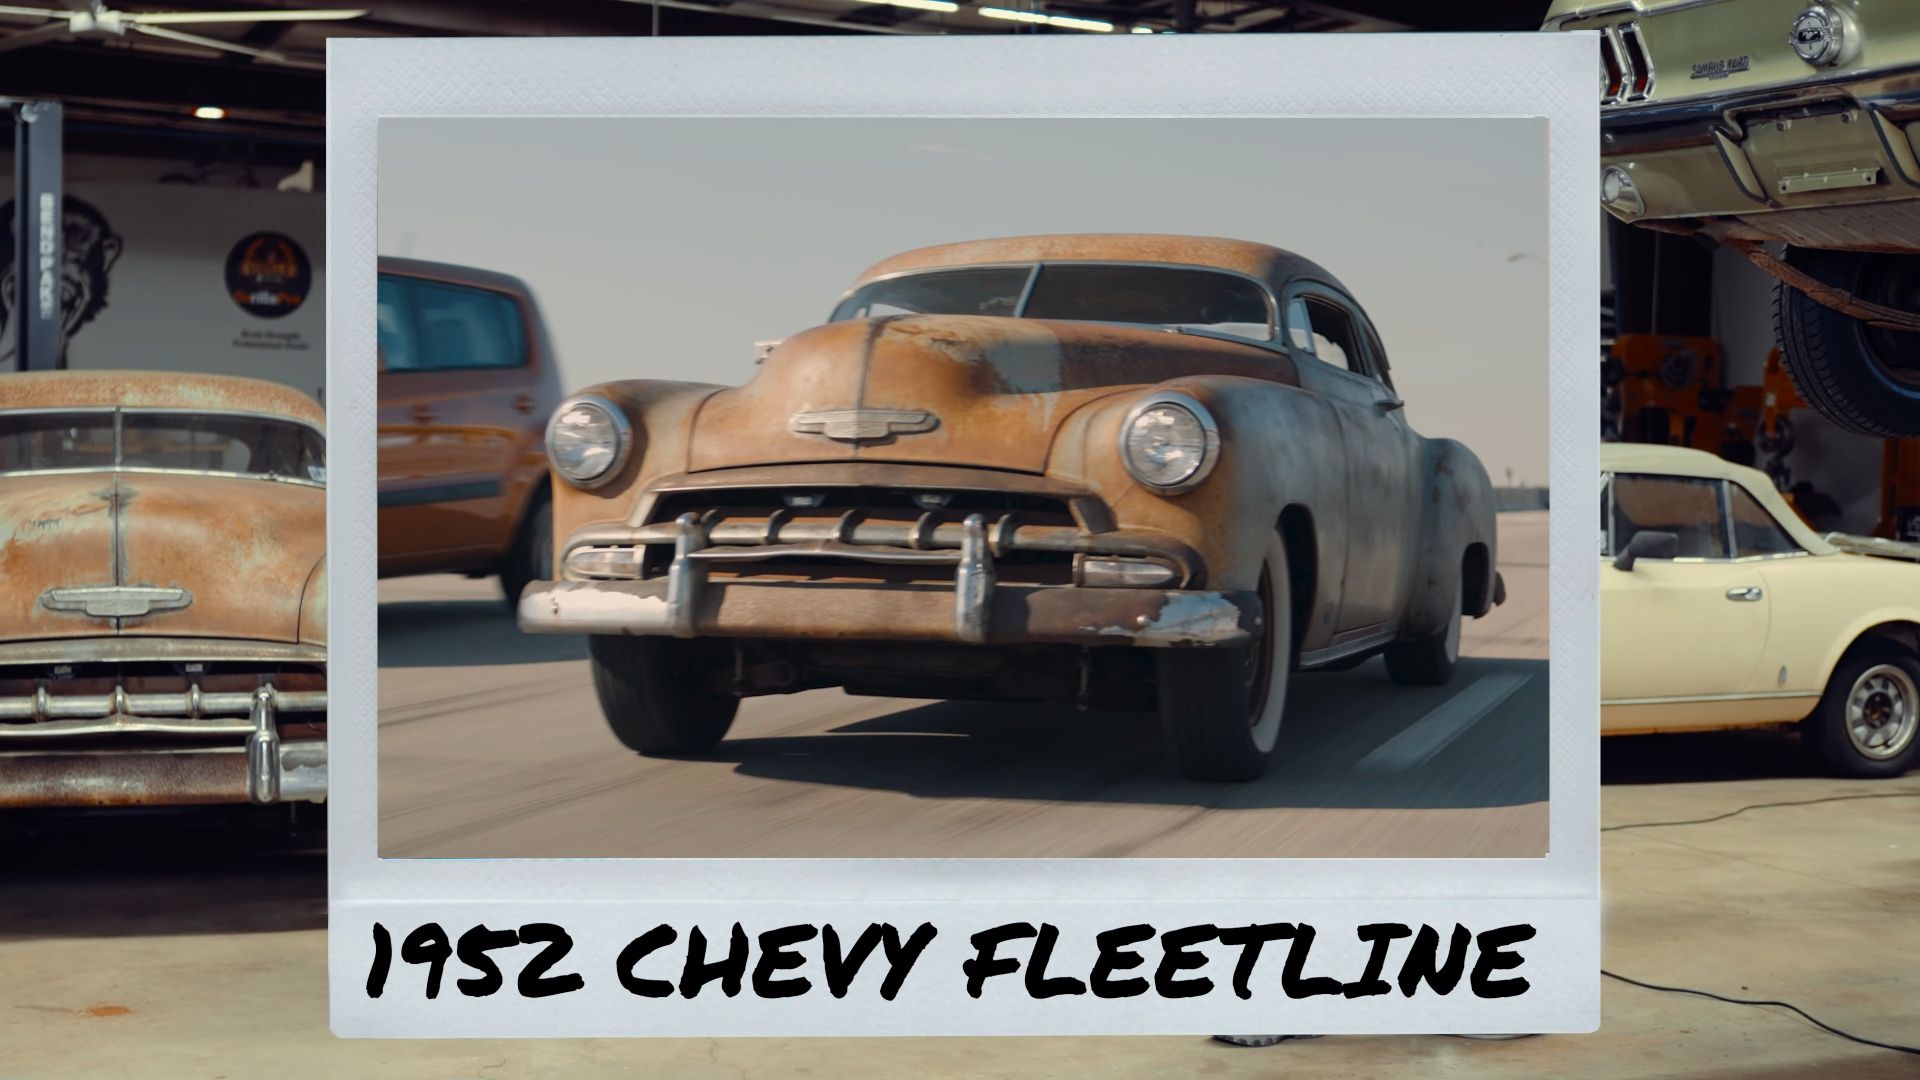 Gas Monkey Garage 1952 Chevrolet Fleetline vue du quart avant